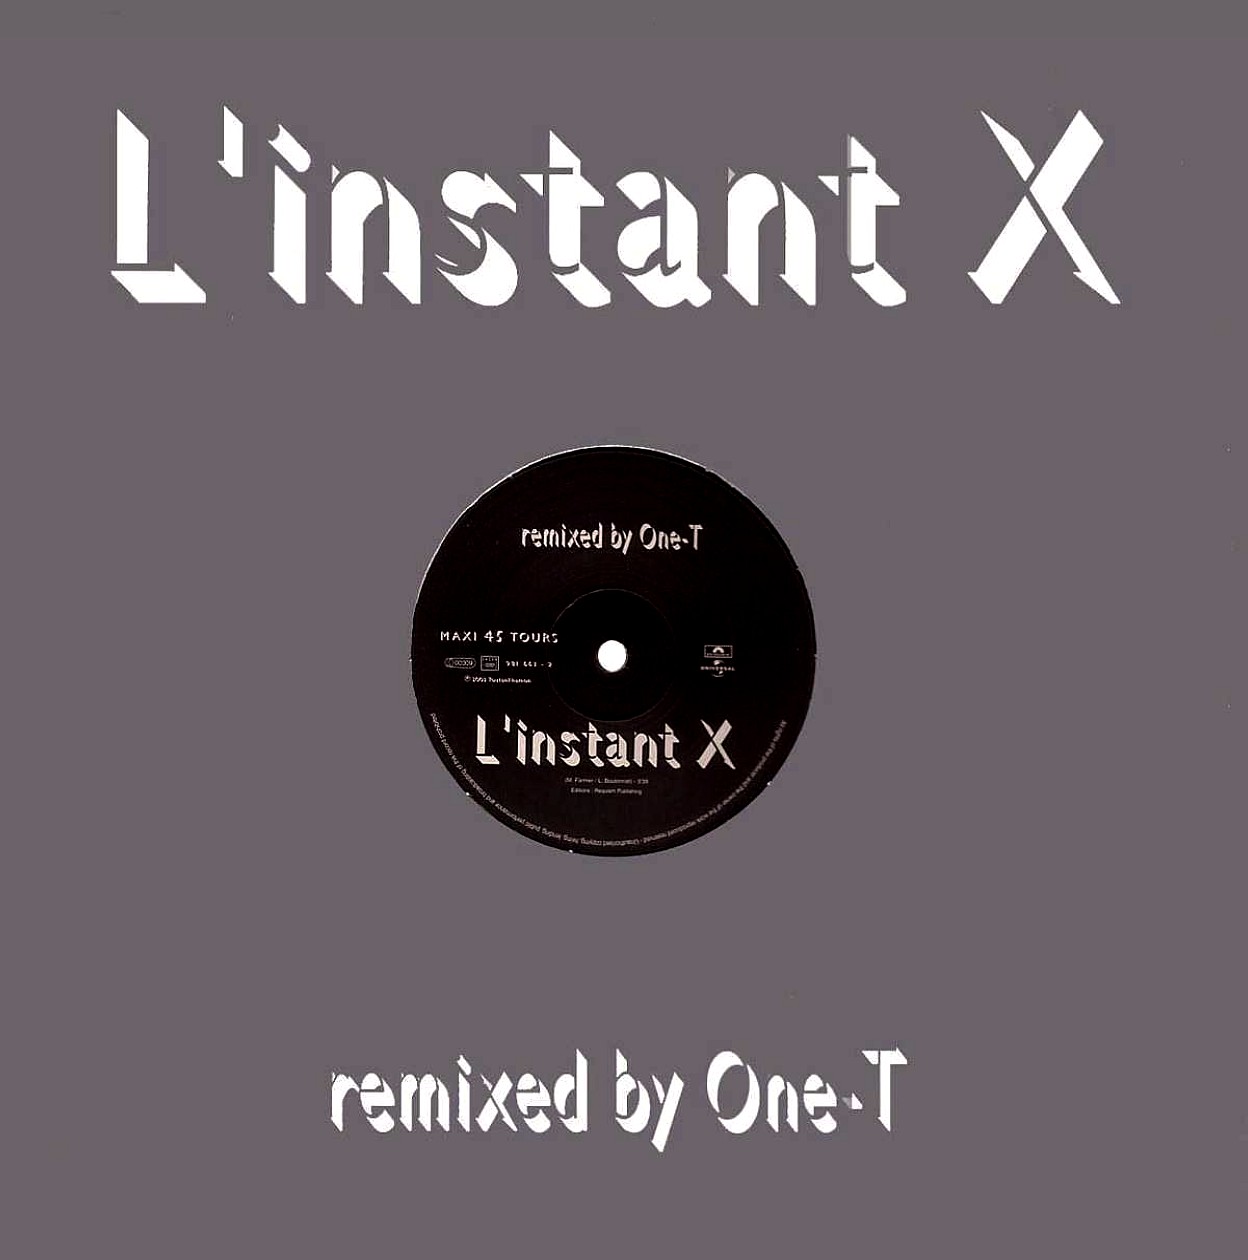 L'instant X maxi 45 tours RemixeS